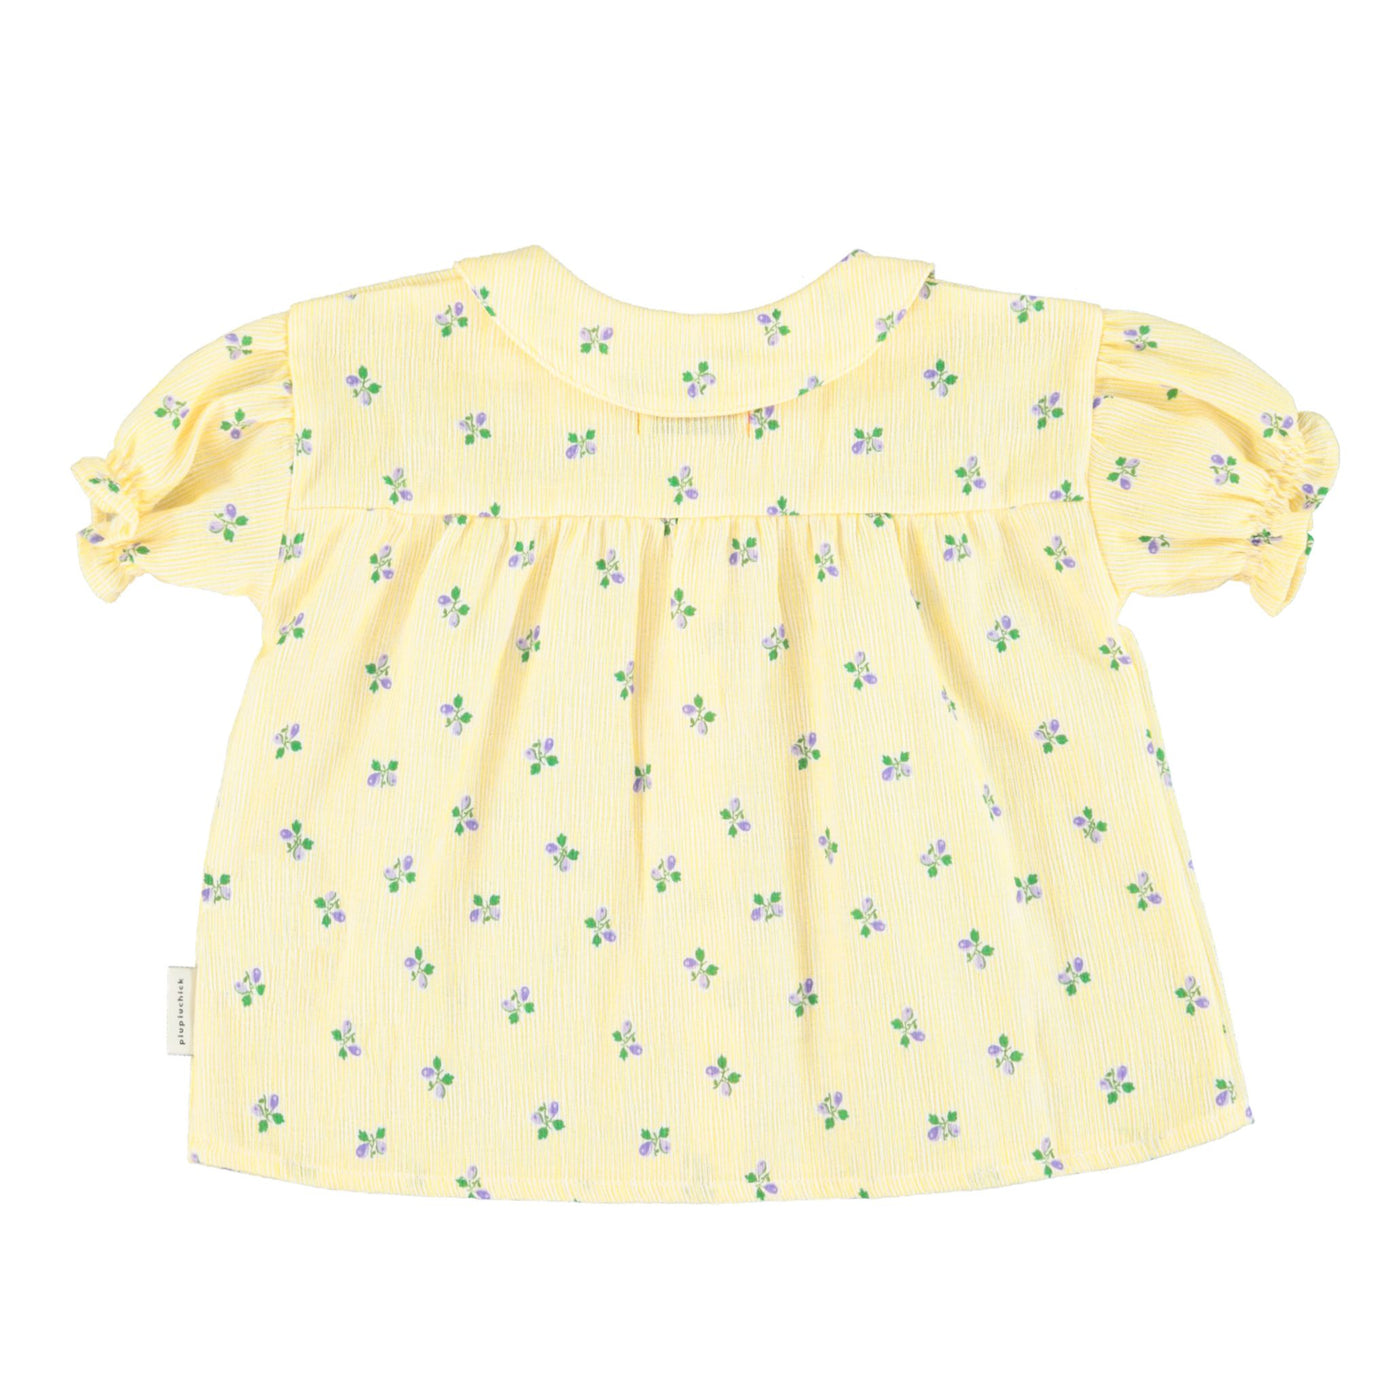 Piupiuchick peter pan collar shirt w/ balloon sleeves yellow stripes w/ little flowers